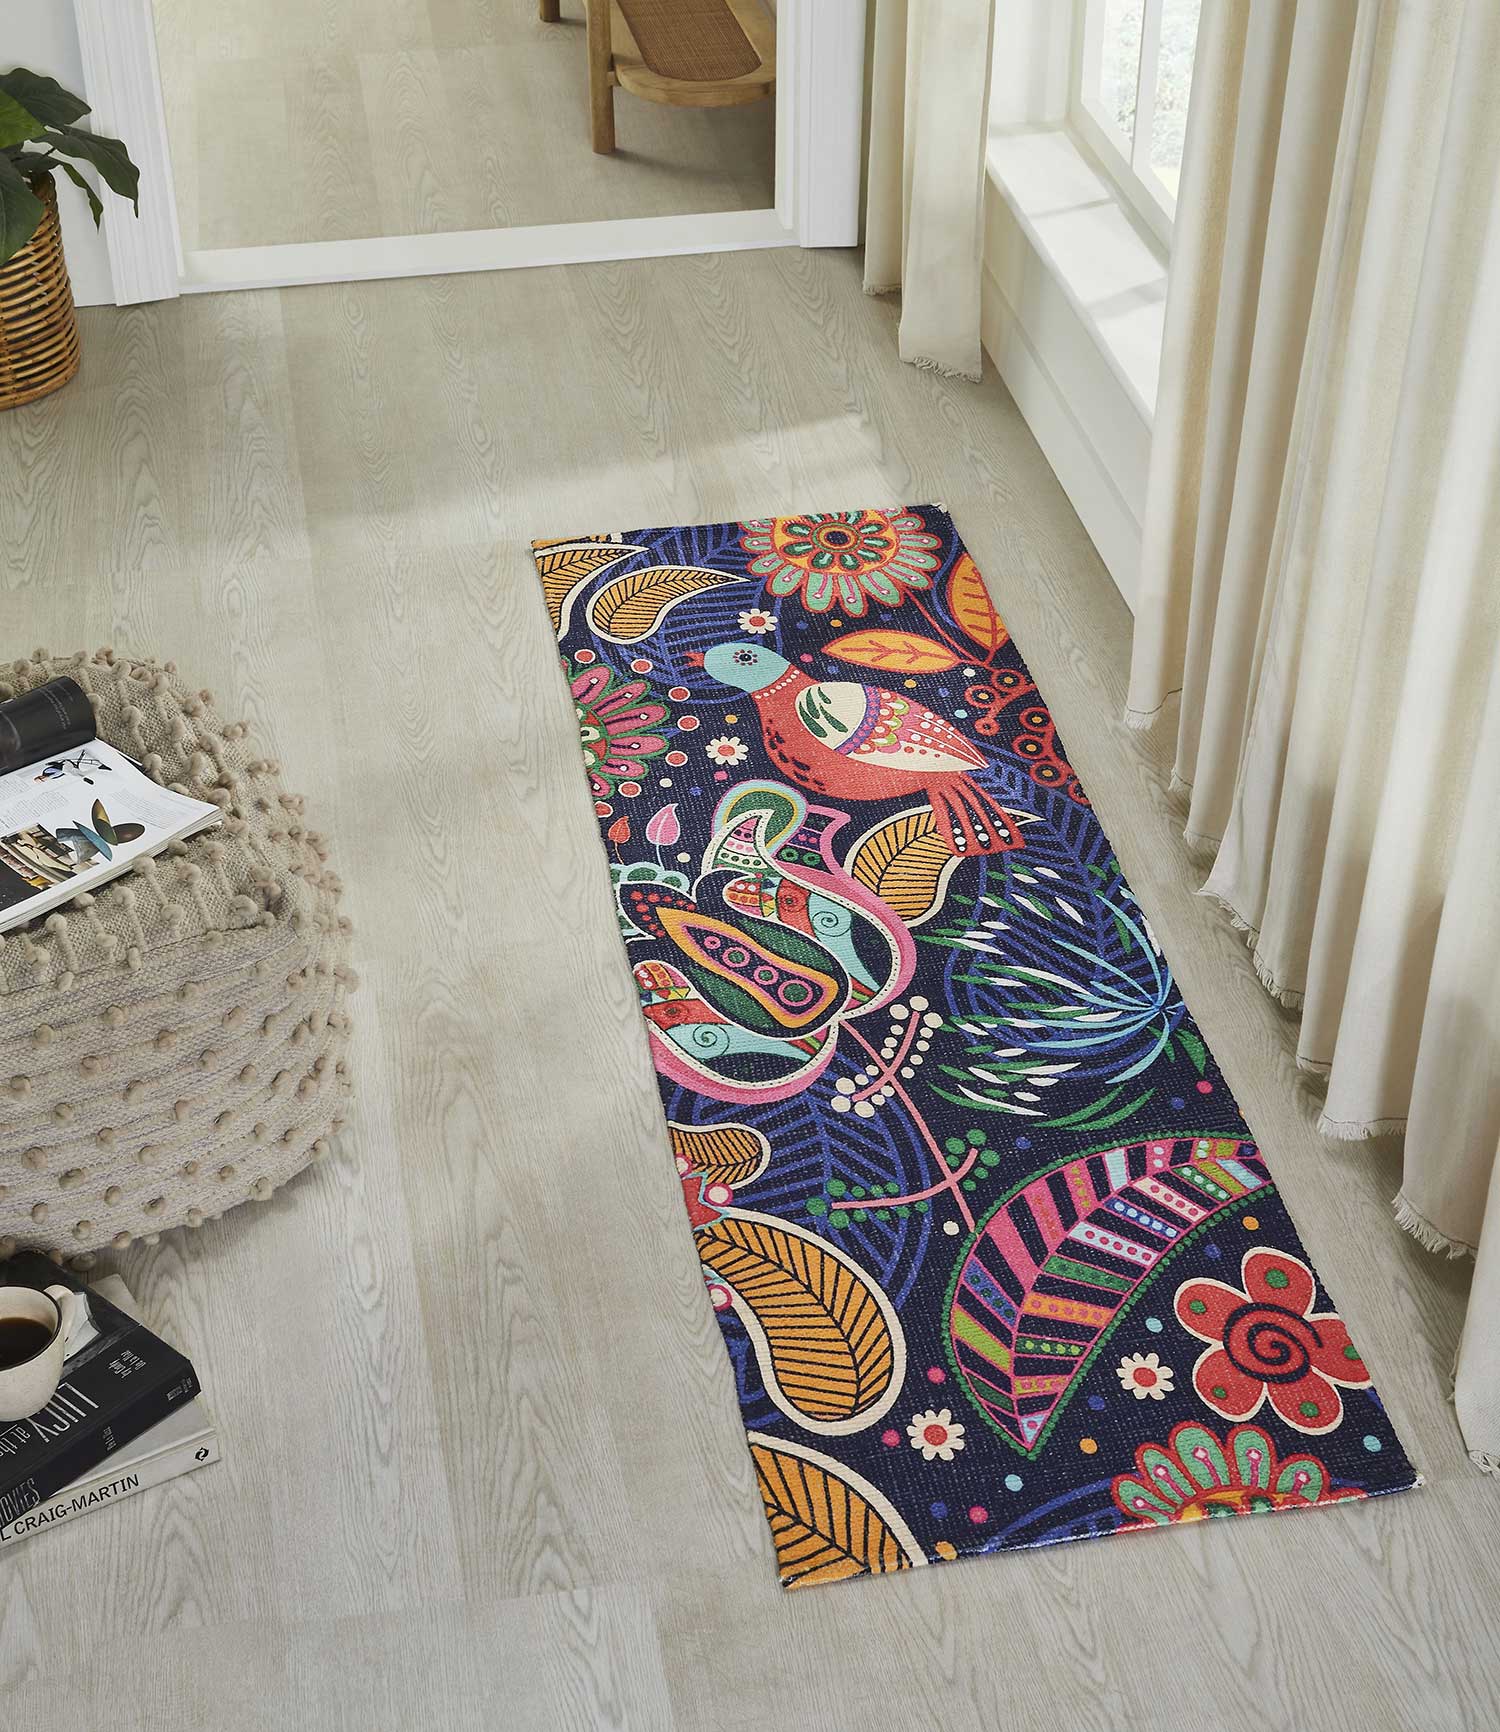 Mona-B Floor Covering Mona B Printed Vintage Dhurrie Carpet Rug Runner for Living Room Bedroom: 1.83 X 6 Feet Multi Color - PR-111 (2272)